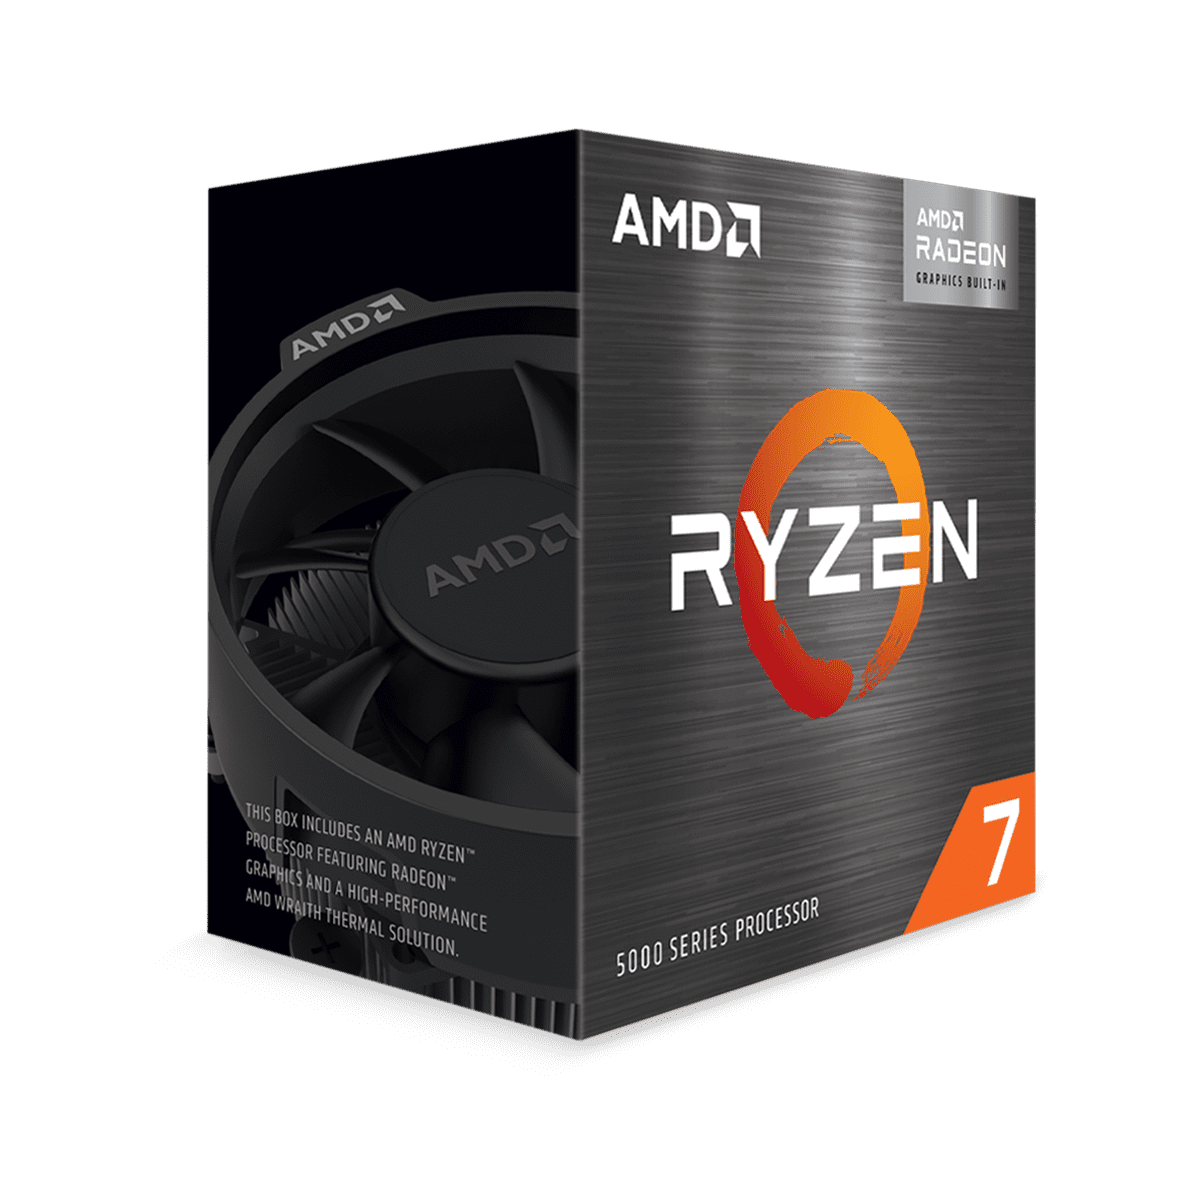 2021.3製AMD Ryzen 7/NVMe1T/16G/FHD/AH50F1